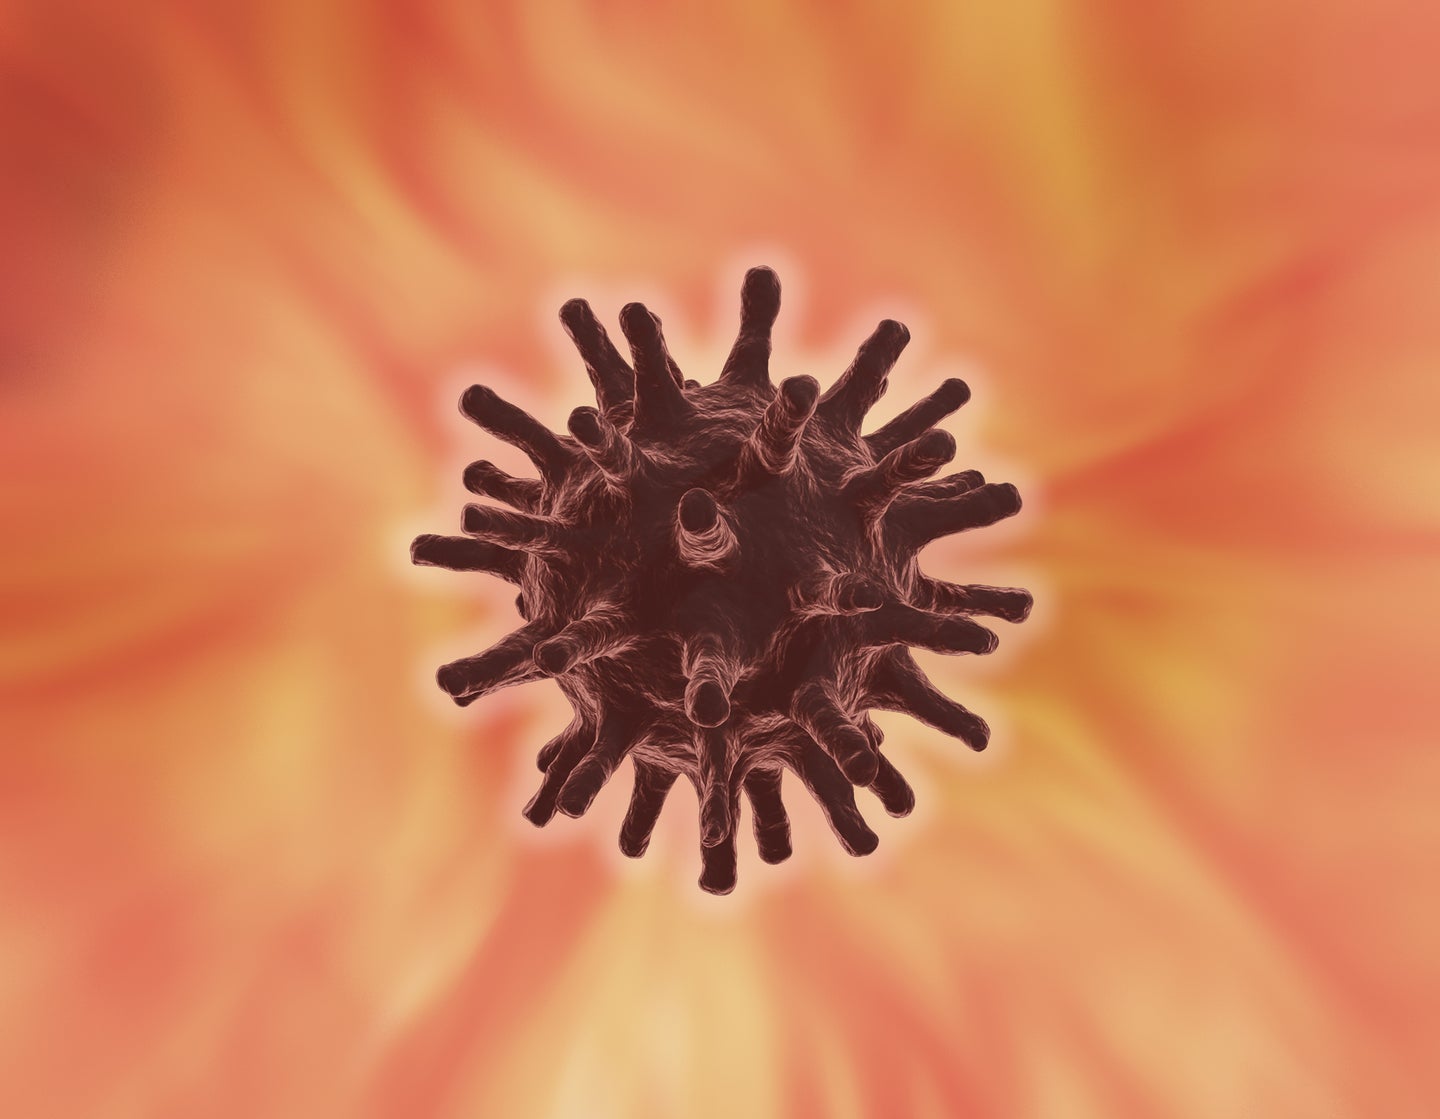 SARS-CoV-2 coronavirus cell modeled in purple on an orange background